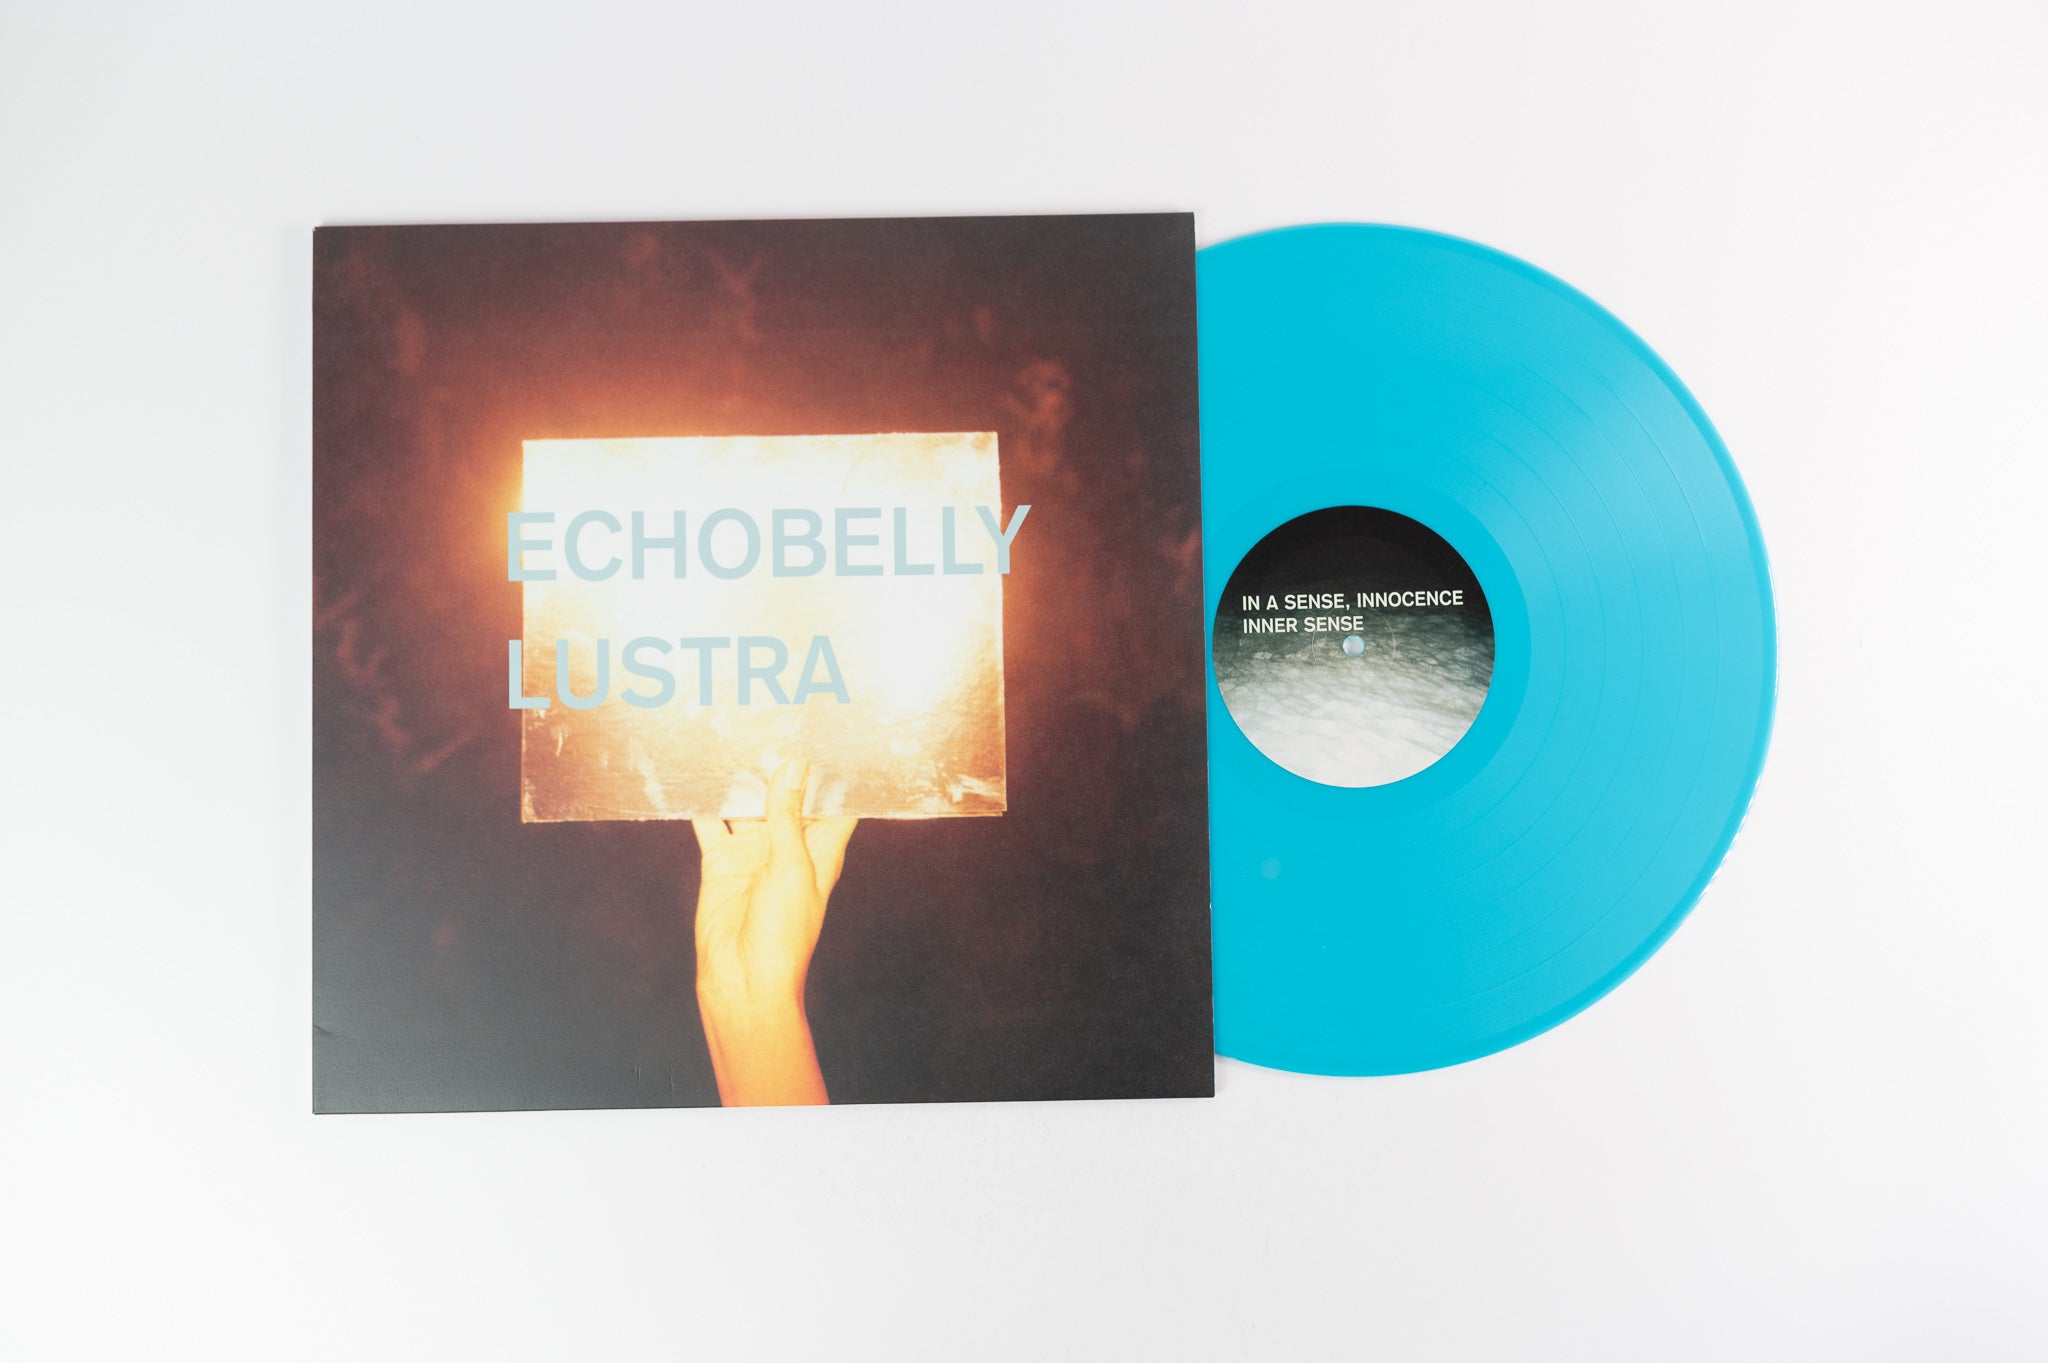 Echobelly - Lustra on Music On Vinyl - Turquoise Vinyl